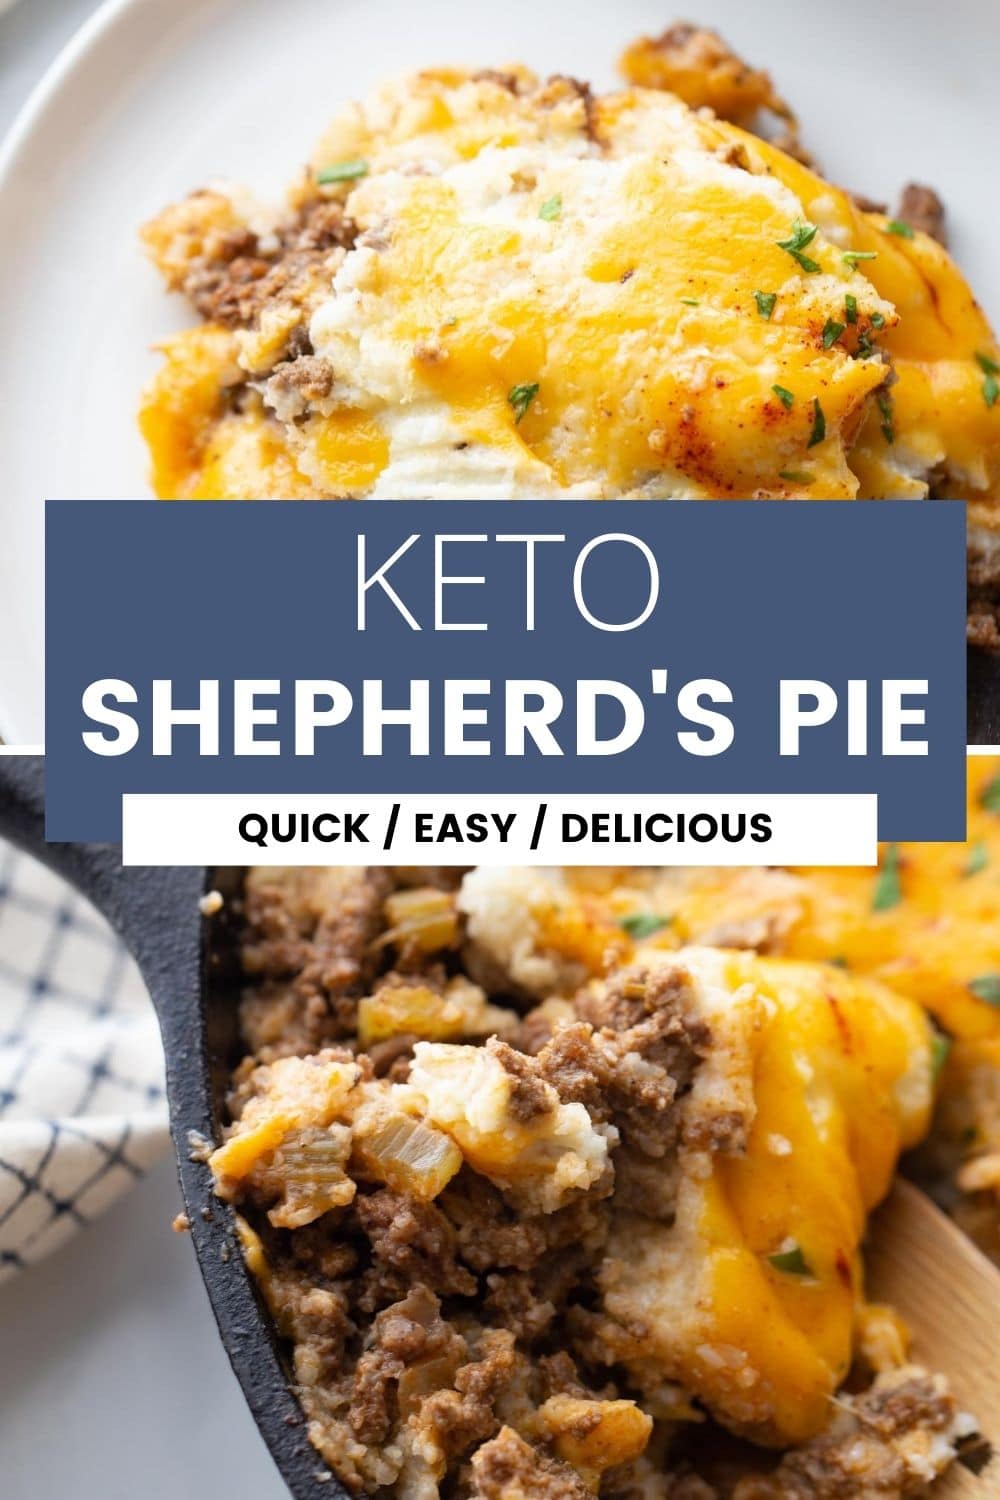 split image of shepherds pie with text overlay "keto shepherd's pie"